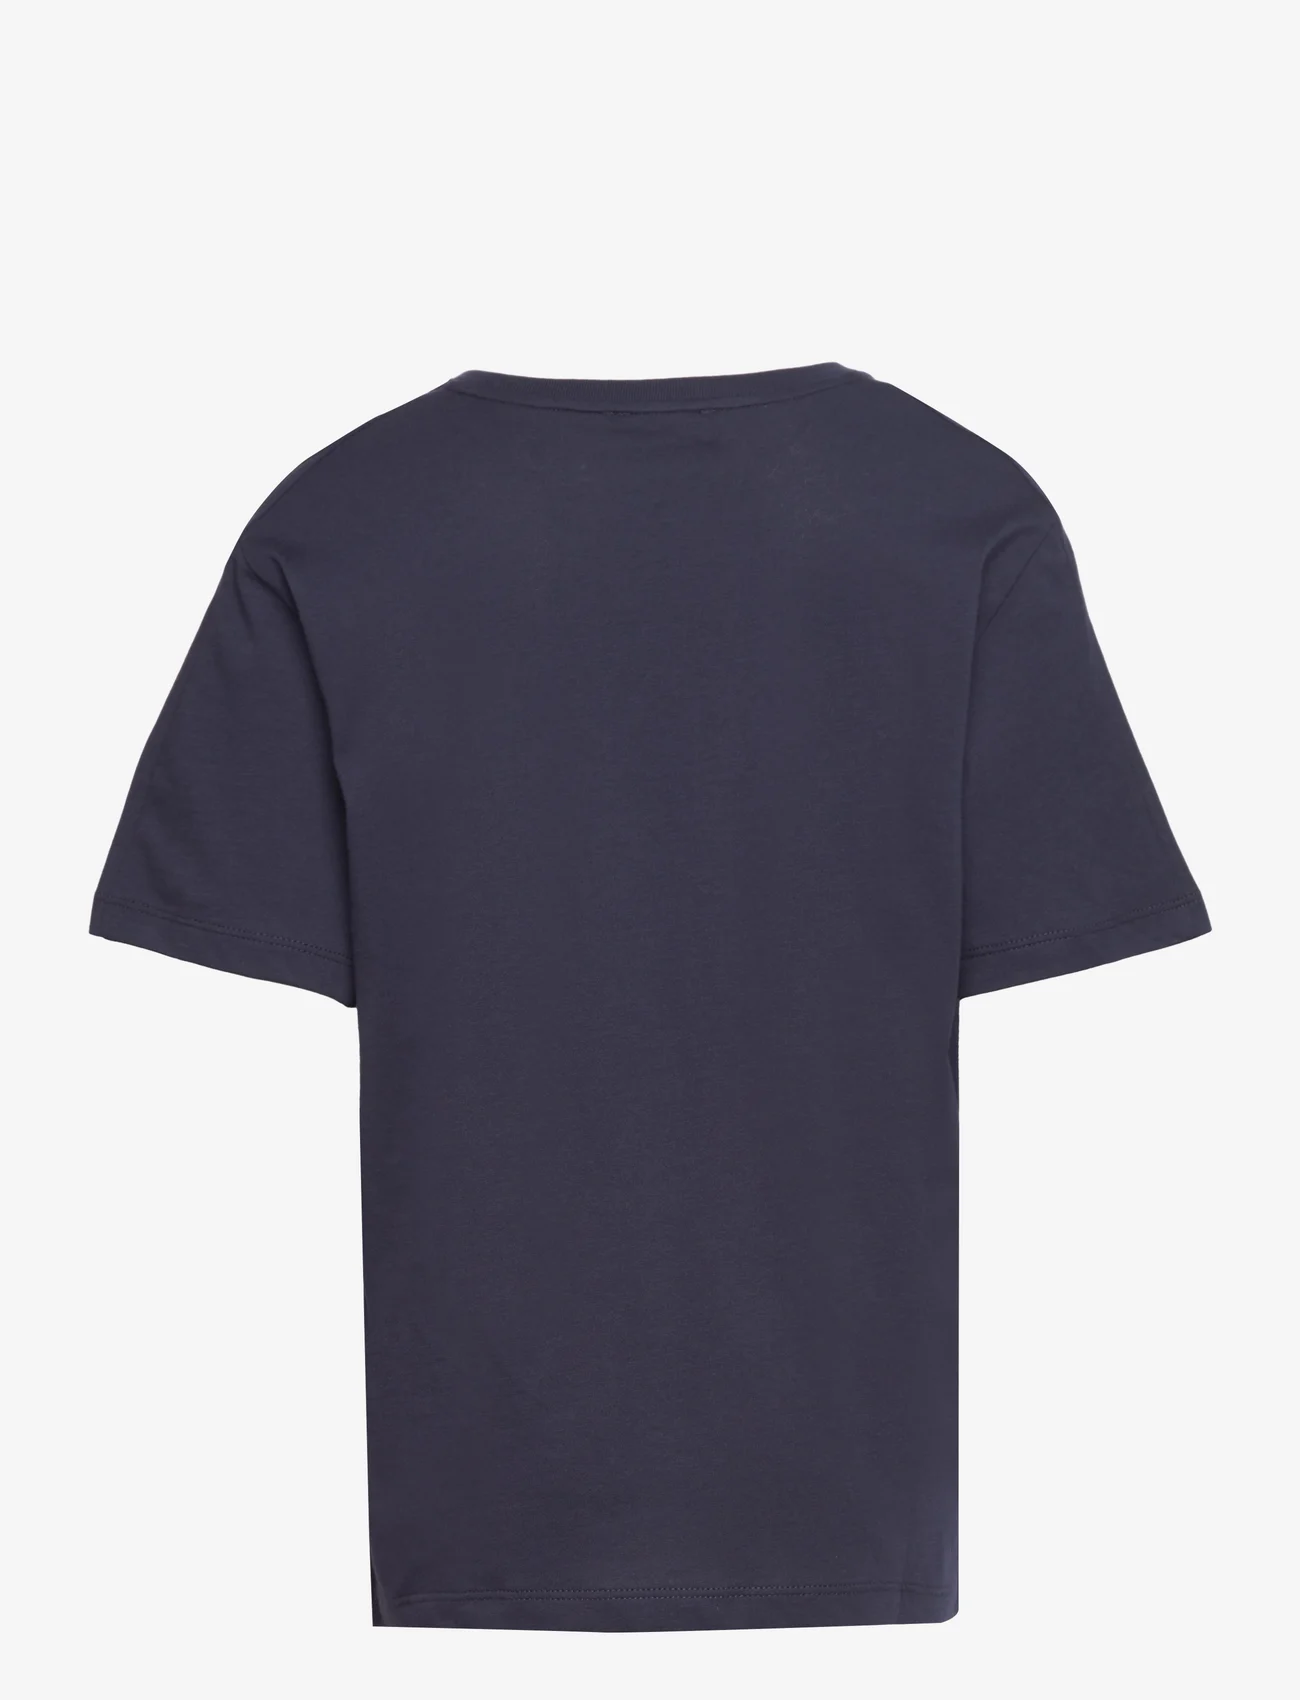 EA7 - T-SHIRTS - kortärmade t-shirts - 1554-navy blue - 1